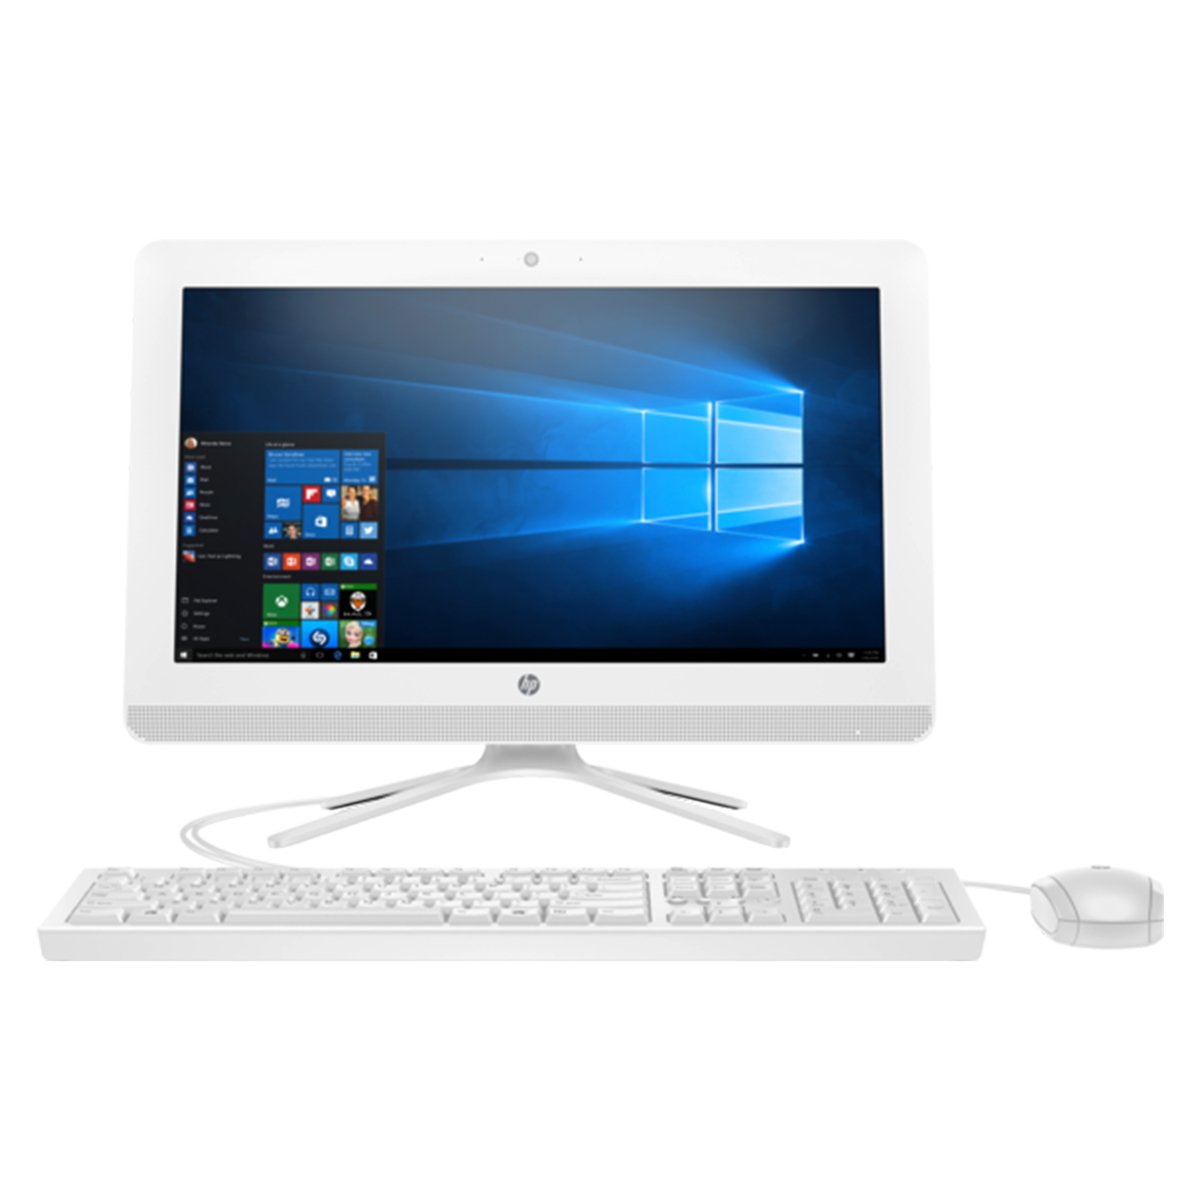 HP All in One Desktop 20-C402,19.5-inch FHD IPS Screen,Core i3,4GB RAM,1TB HDD,White